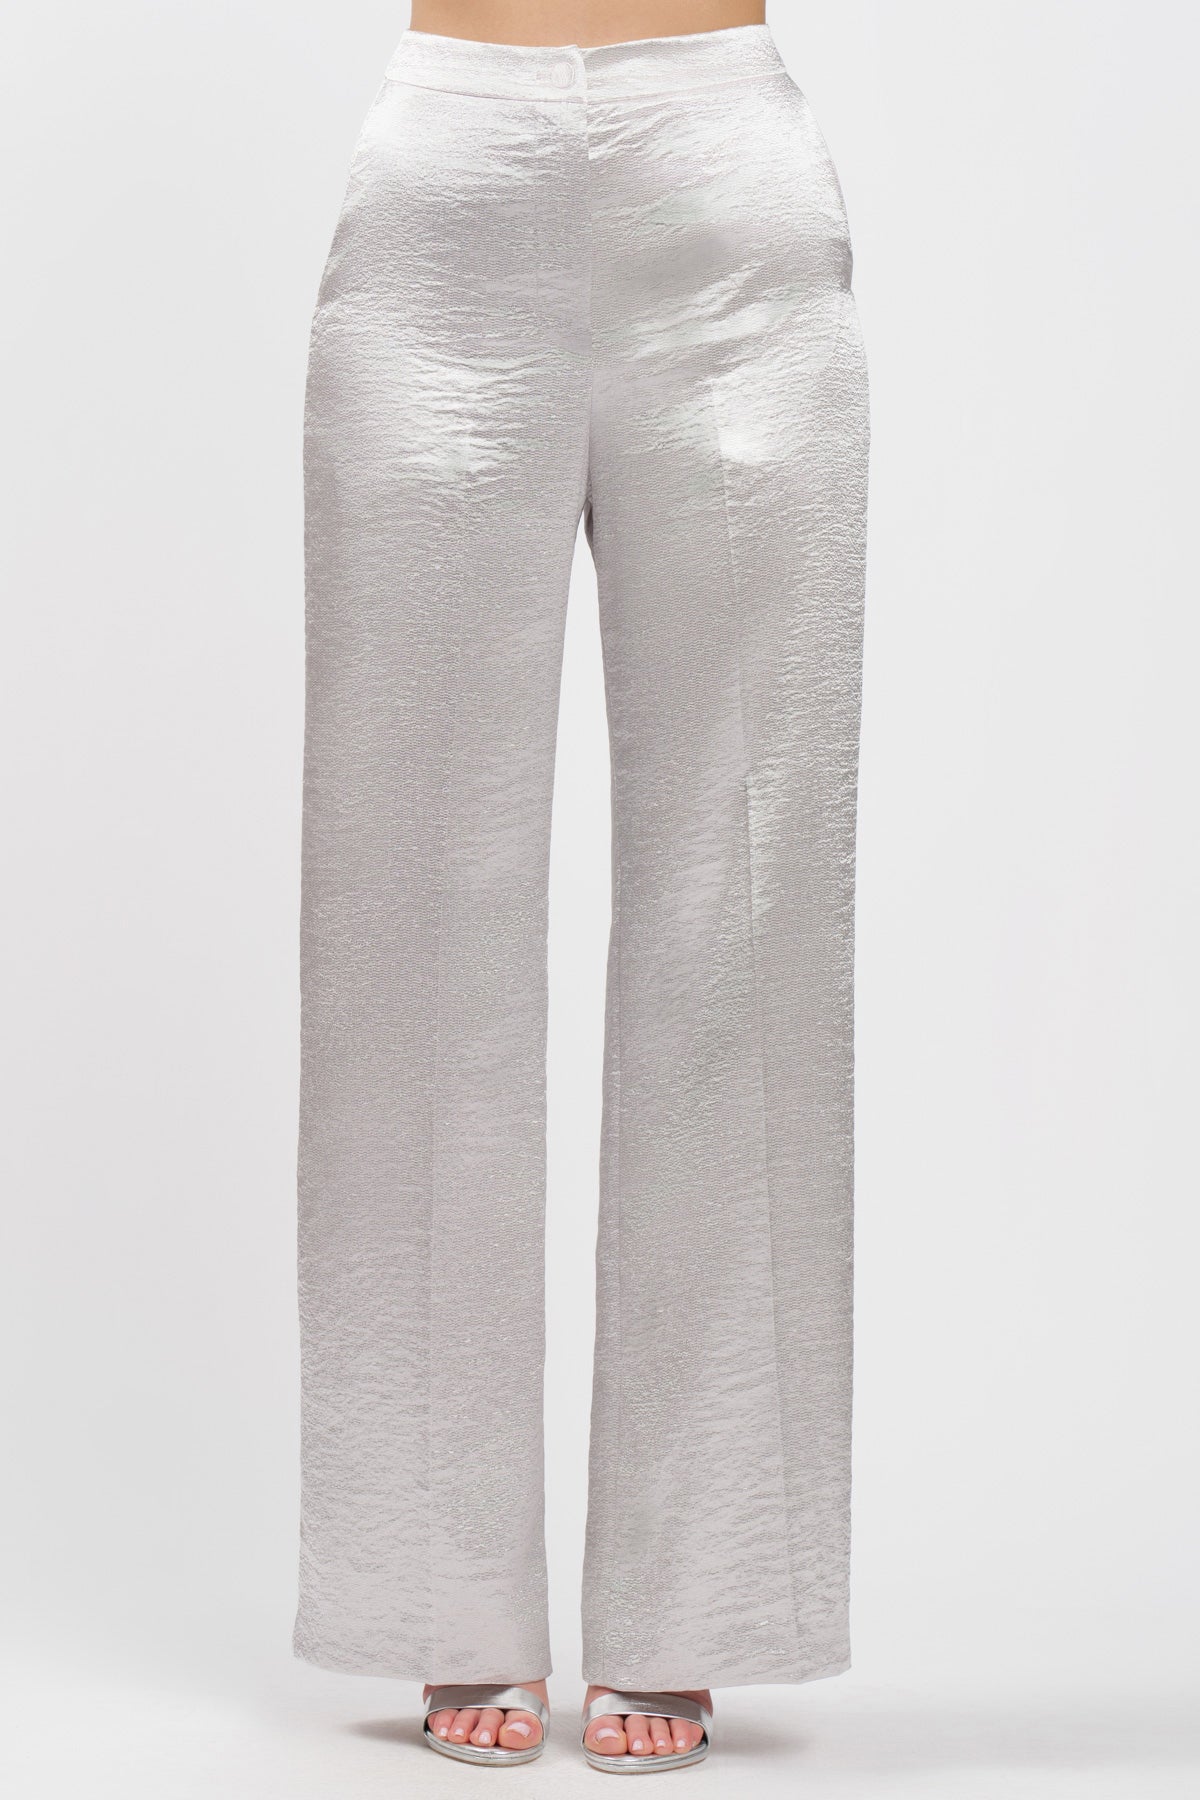 Brilliant Pants Silver